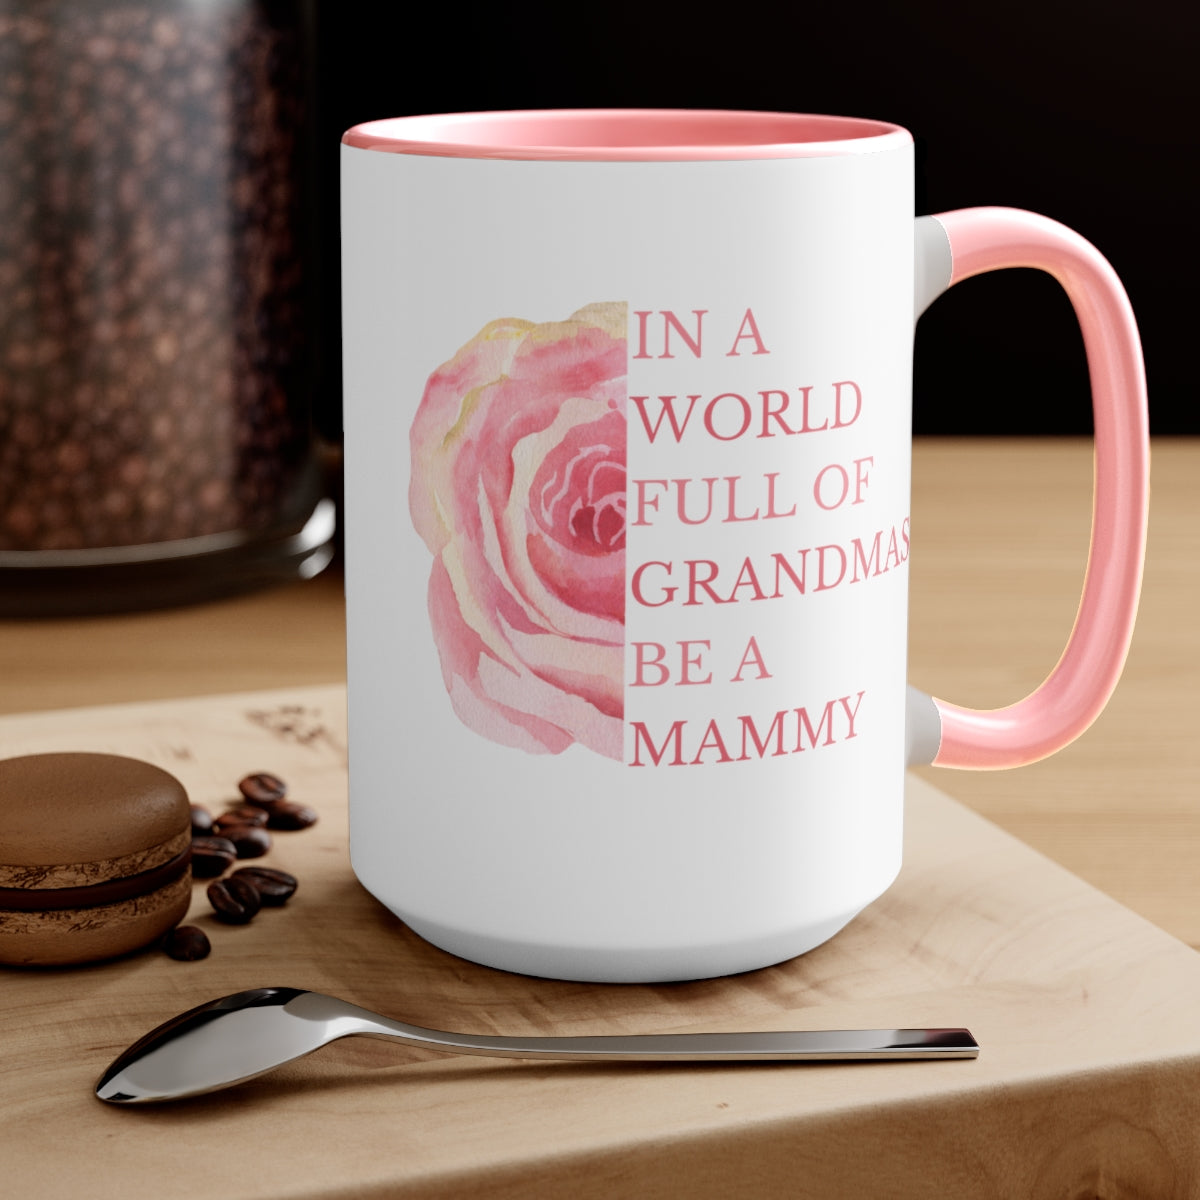 In a World full of Grandmas, Be a Mammy Two-Tone 15oz Mug